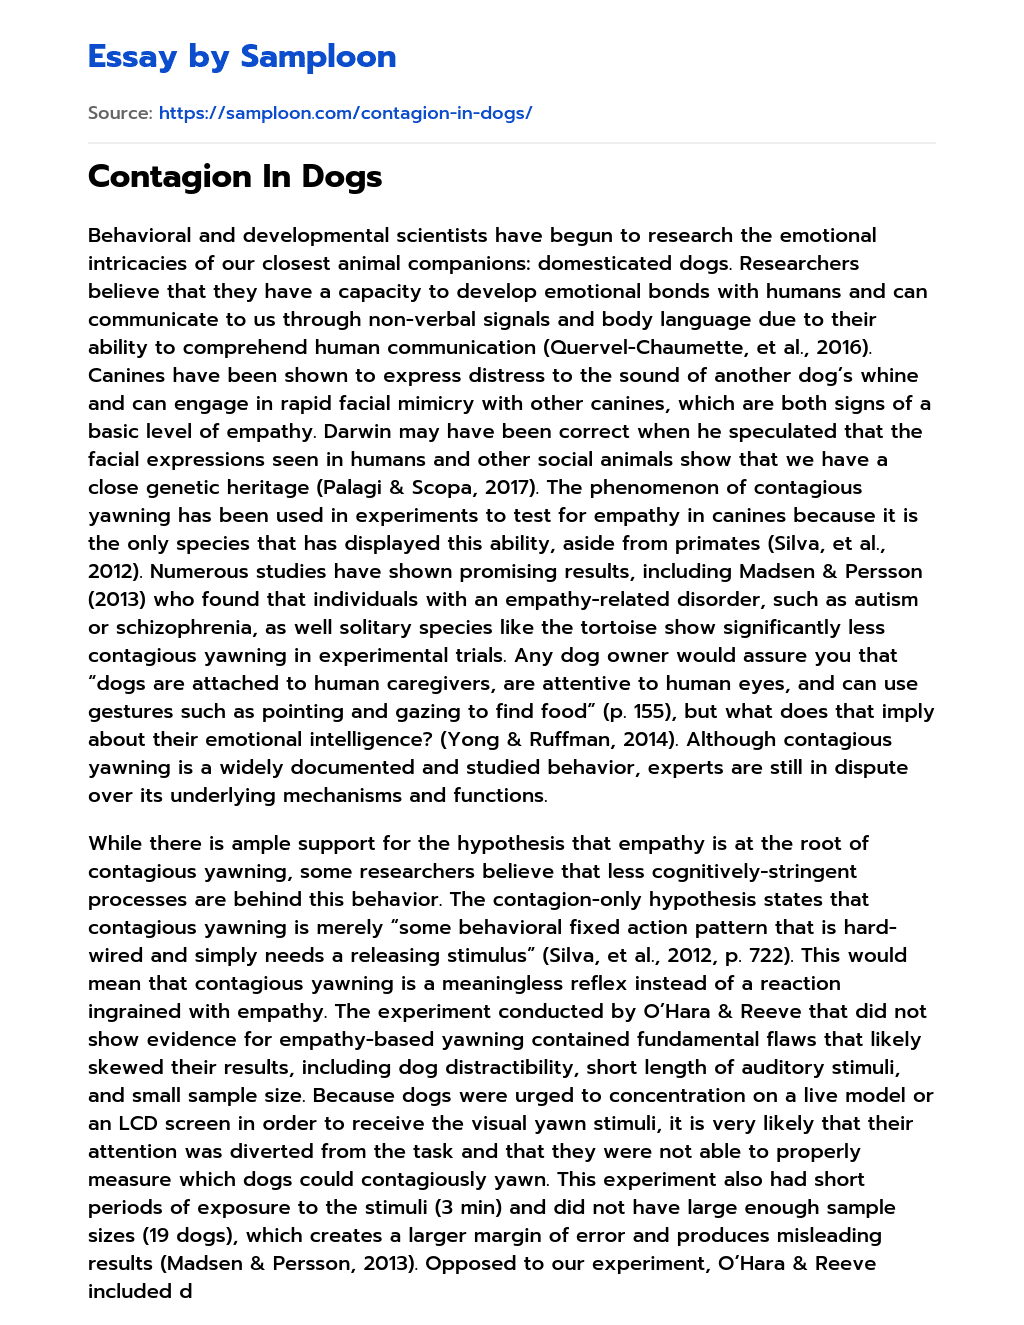 Contagion In Dogs essay